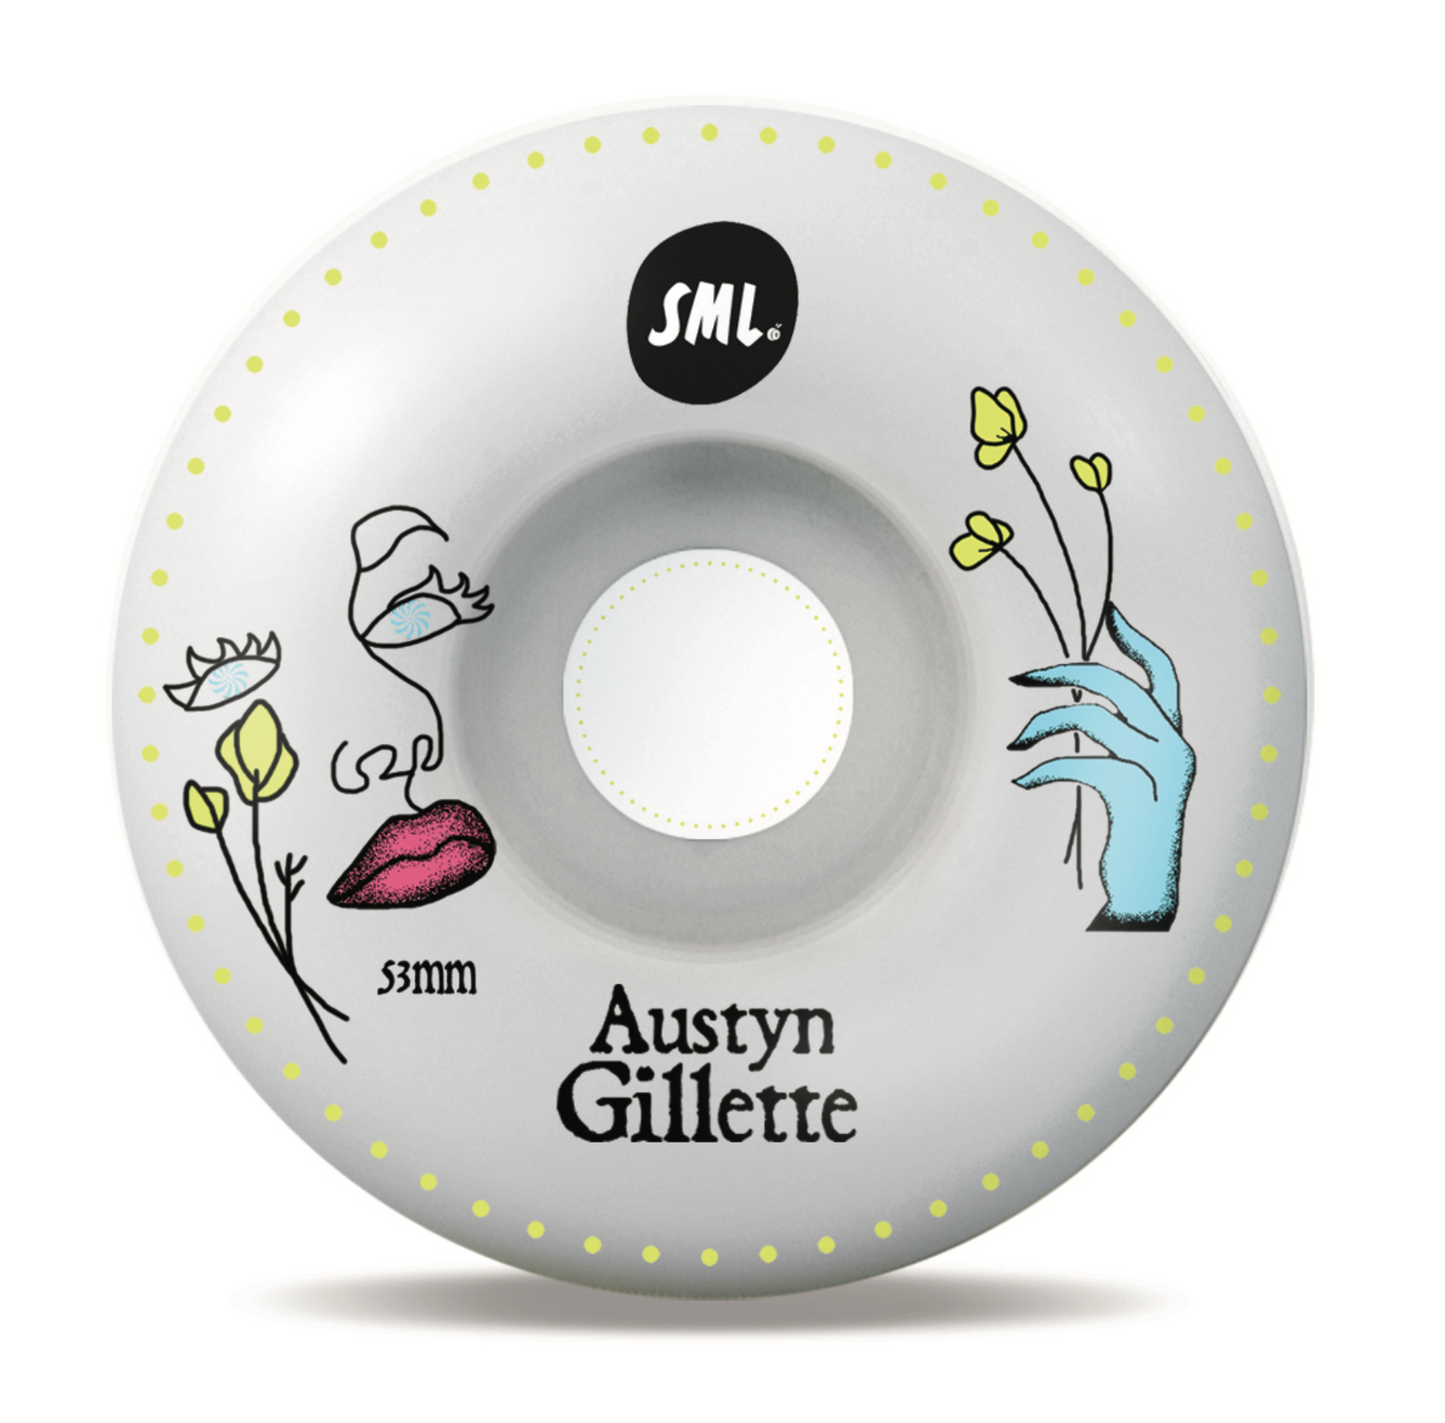 SML Lucidity Series - Austyn Gillette - 53mm